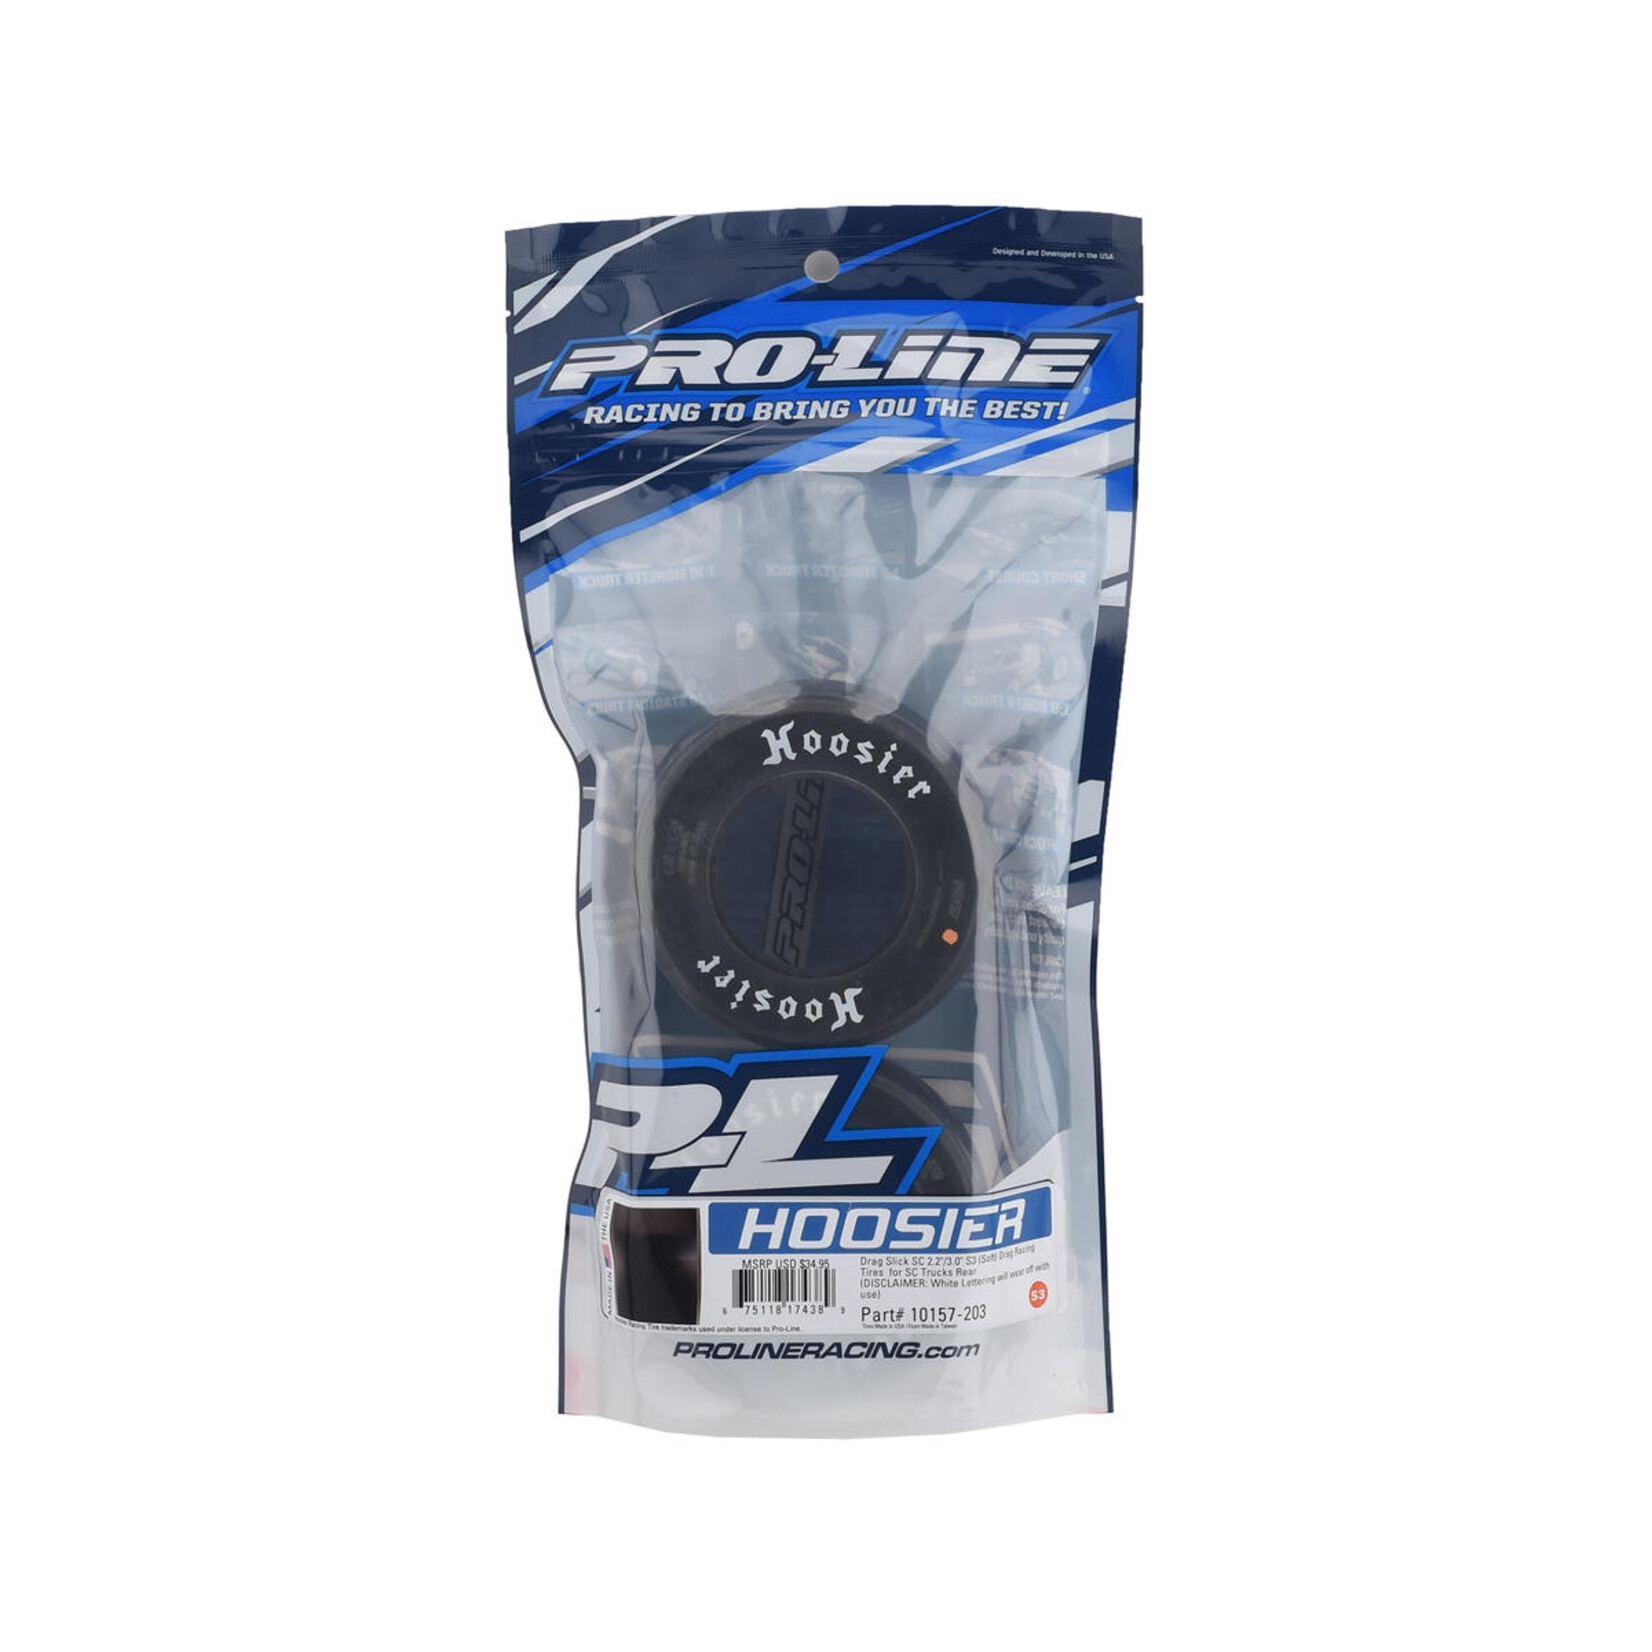 Pro-Line Pro-Line Hoosier Drag Slick 2.2/3.0 SCT Rear Tires (2) (S3) #10157-203